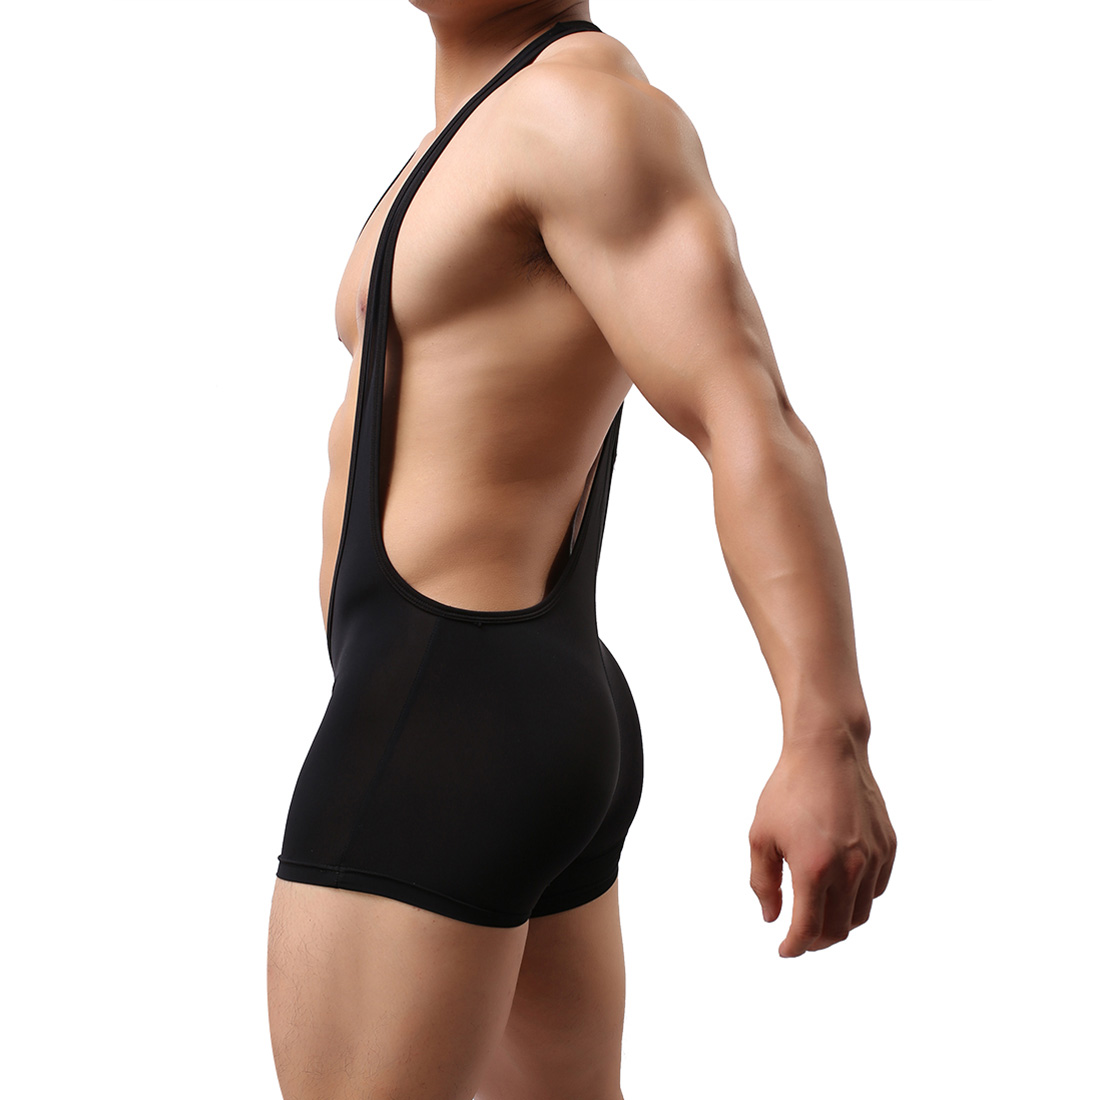 Men's Sexy Lingerie Underwear Sport Fitness One-pieces Swimsuit Wrestling Dress WH41 Black M